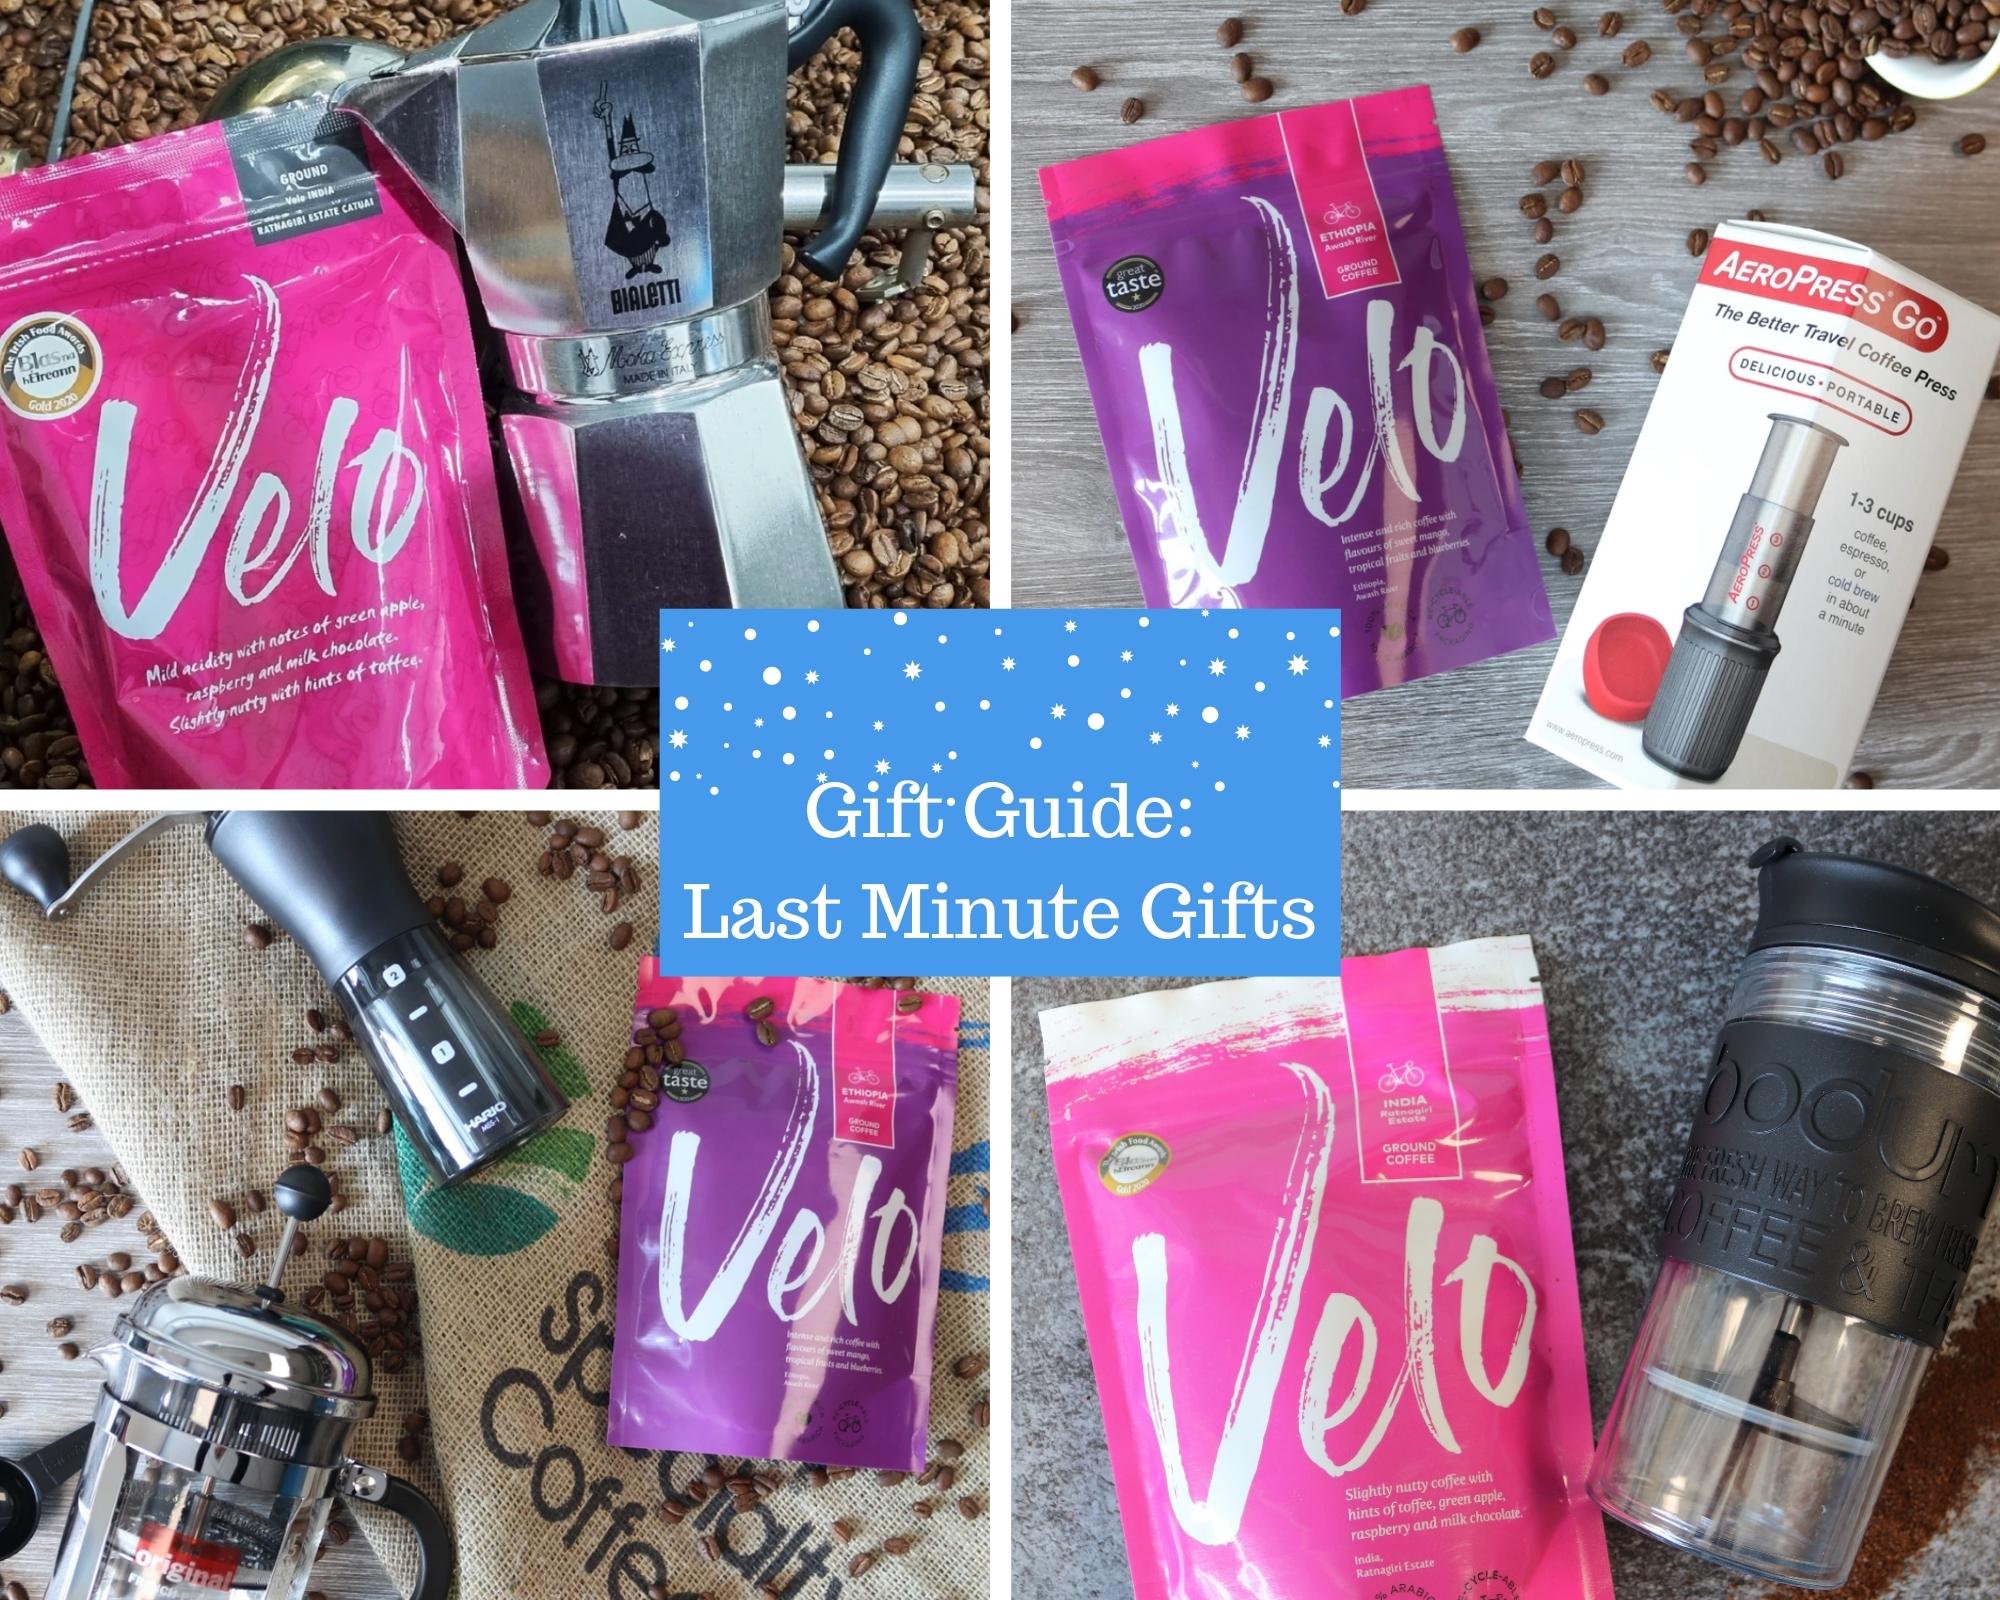 Last Minute Gift Guide - Velo Coffee Roasters